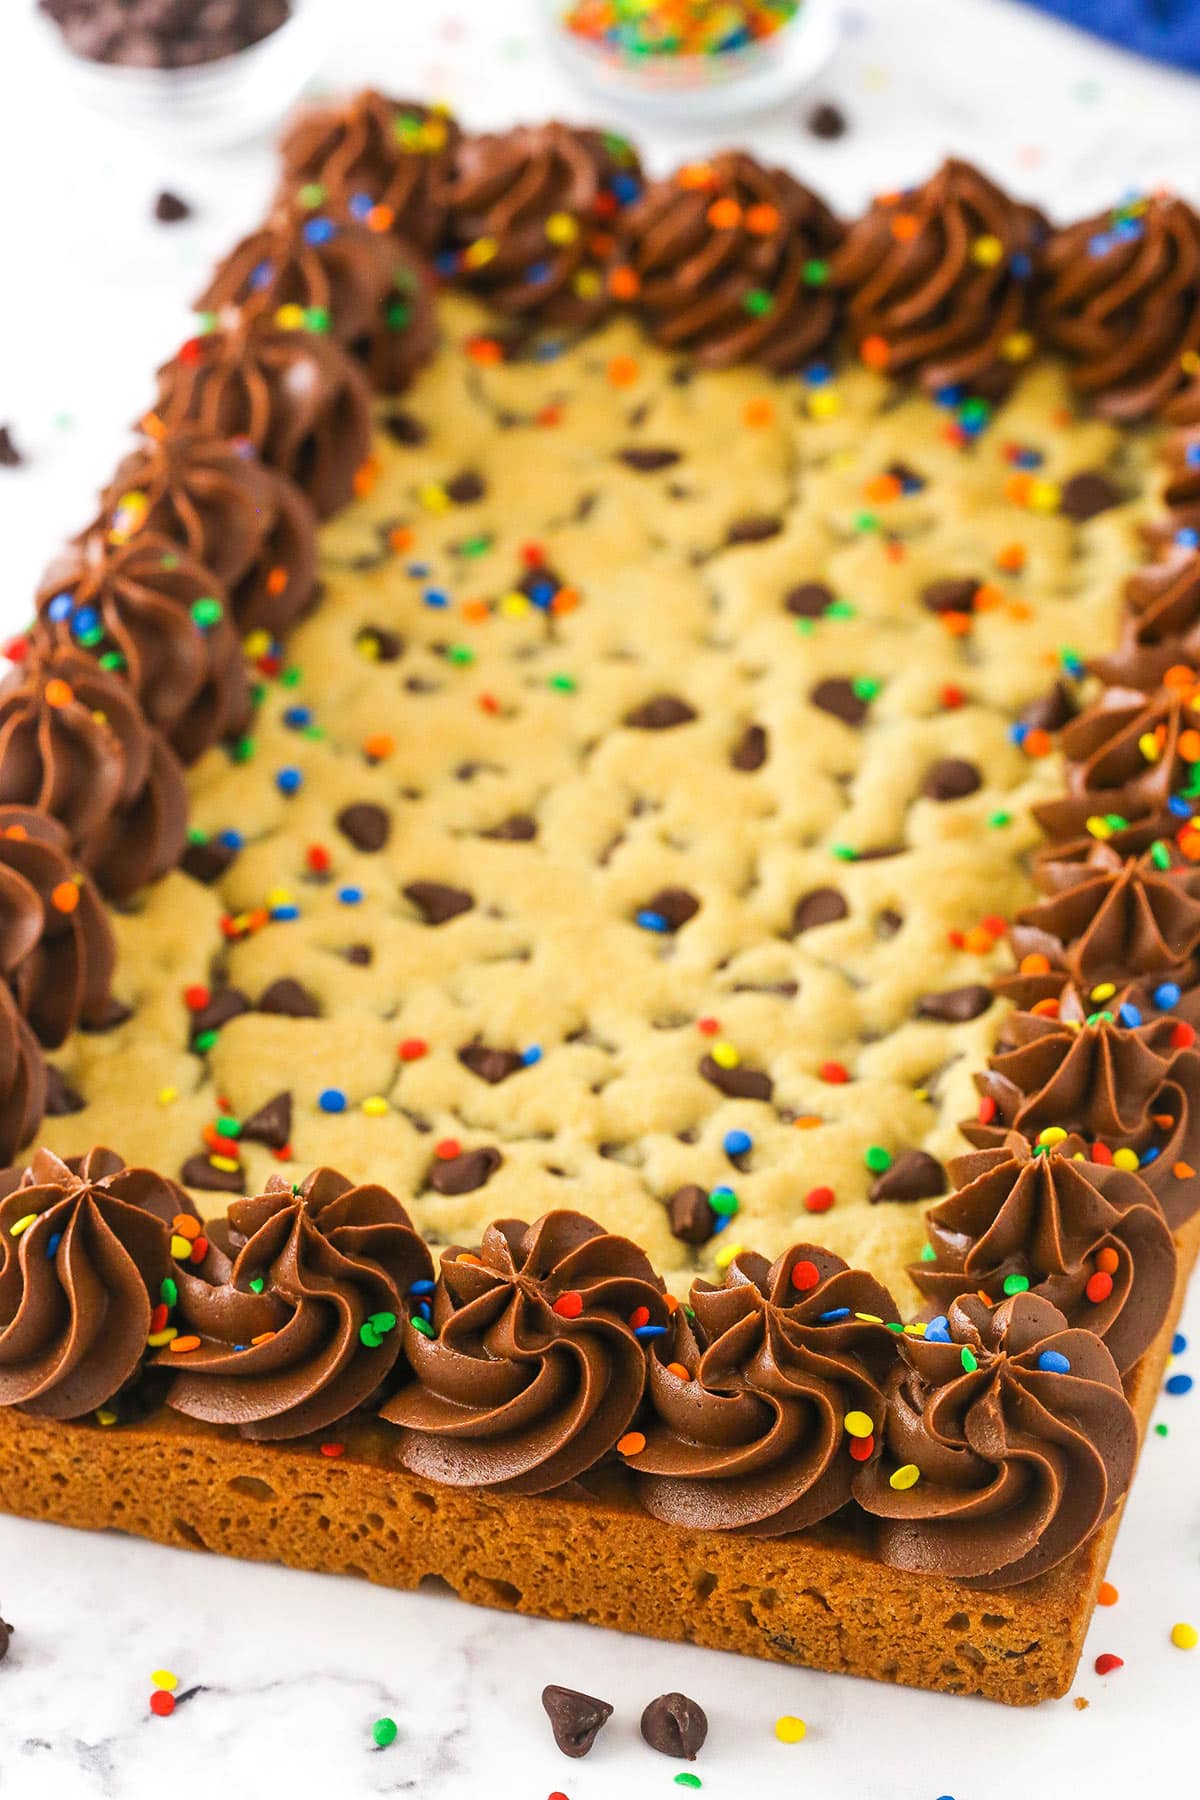 https://www.lifeloveandsugar.com/wp-content/uploads/2022/07/Sheet-Pan-Chocolate-Chip-Cookie-Cake2.jpg